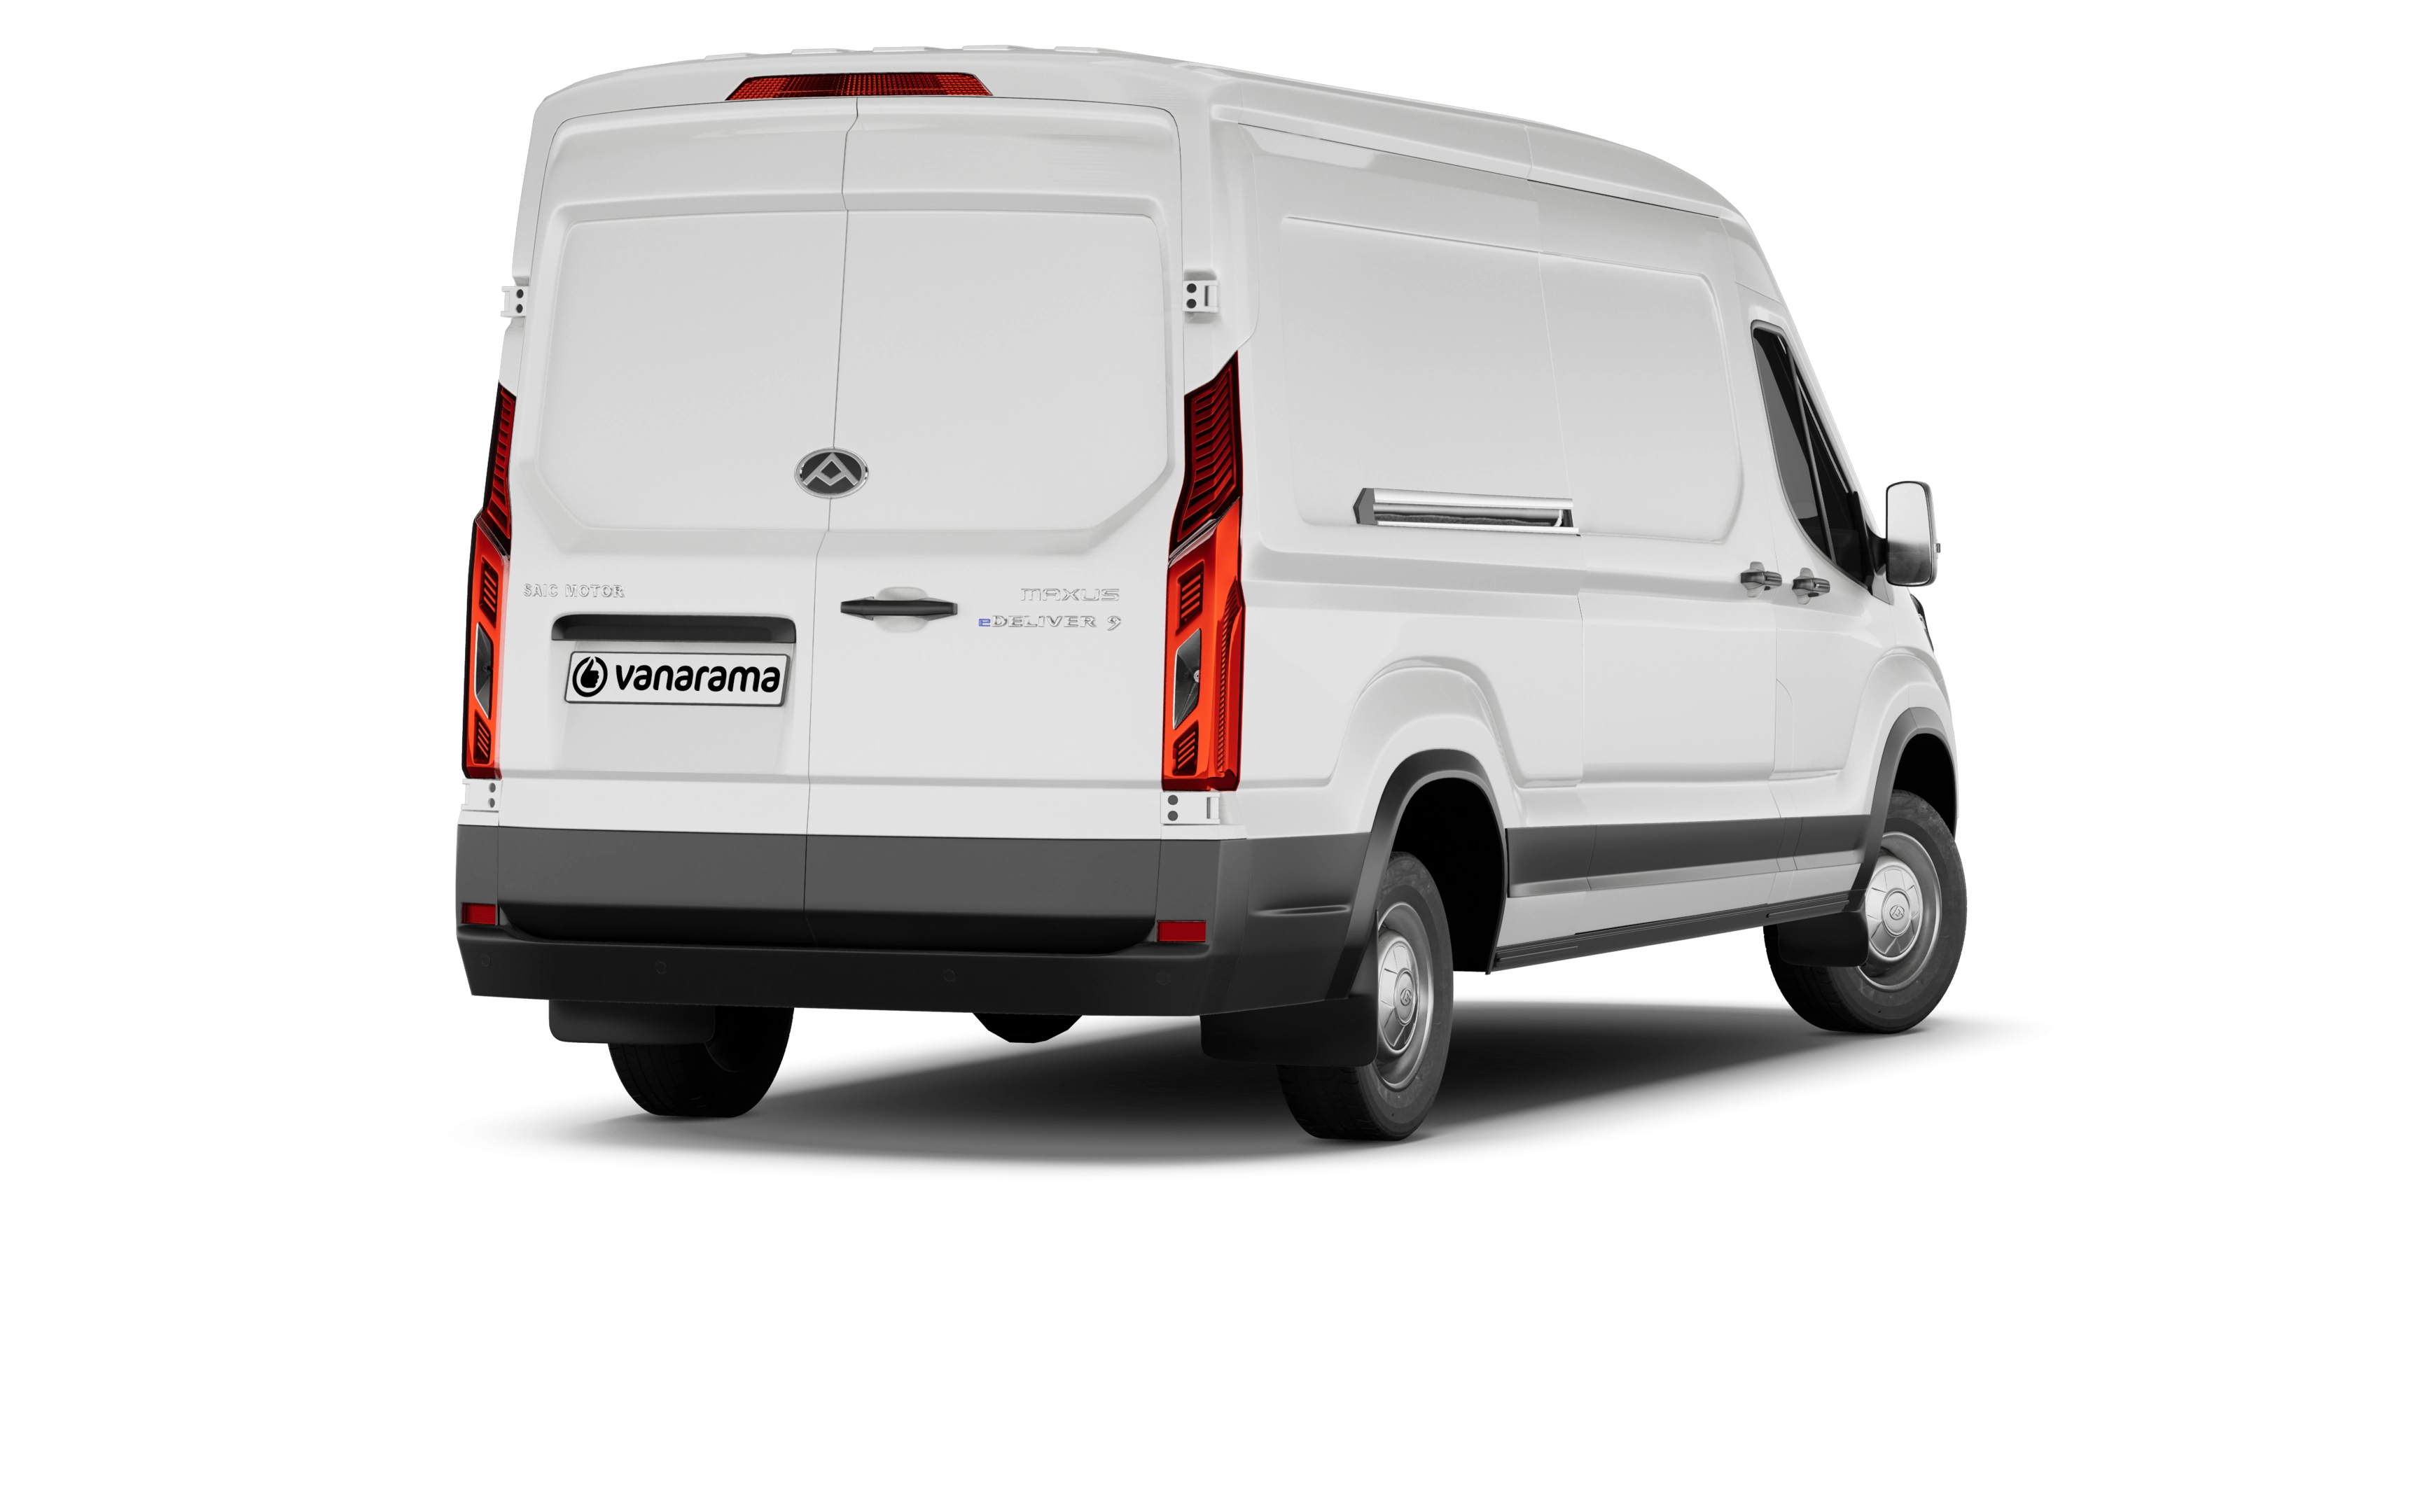 Maxus deliver 9 lwb fwd 2.0 d20 150 lux extra high roof van